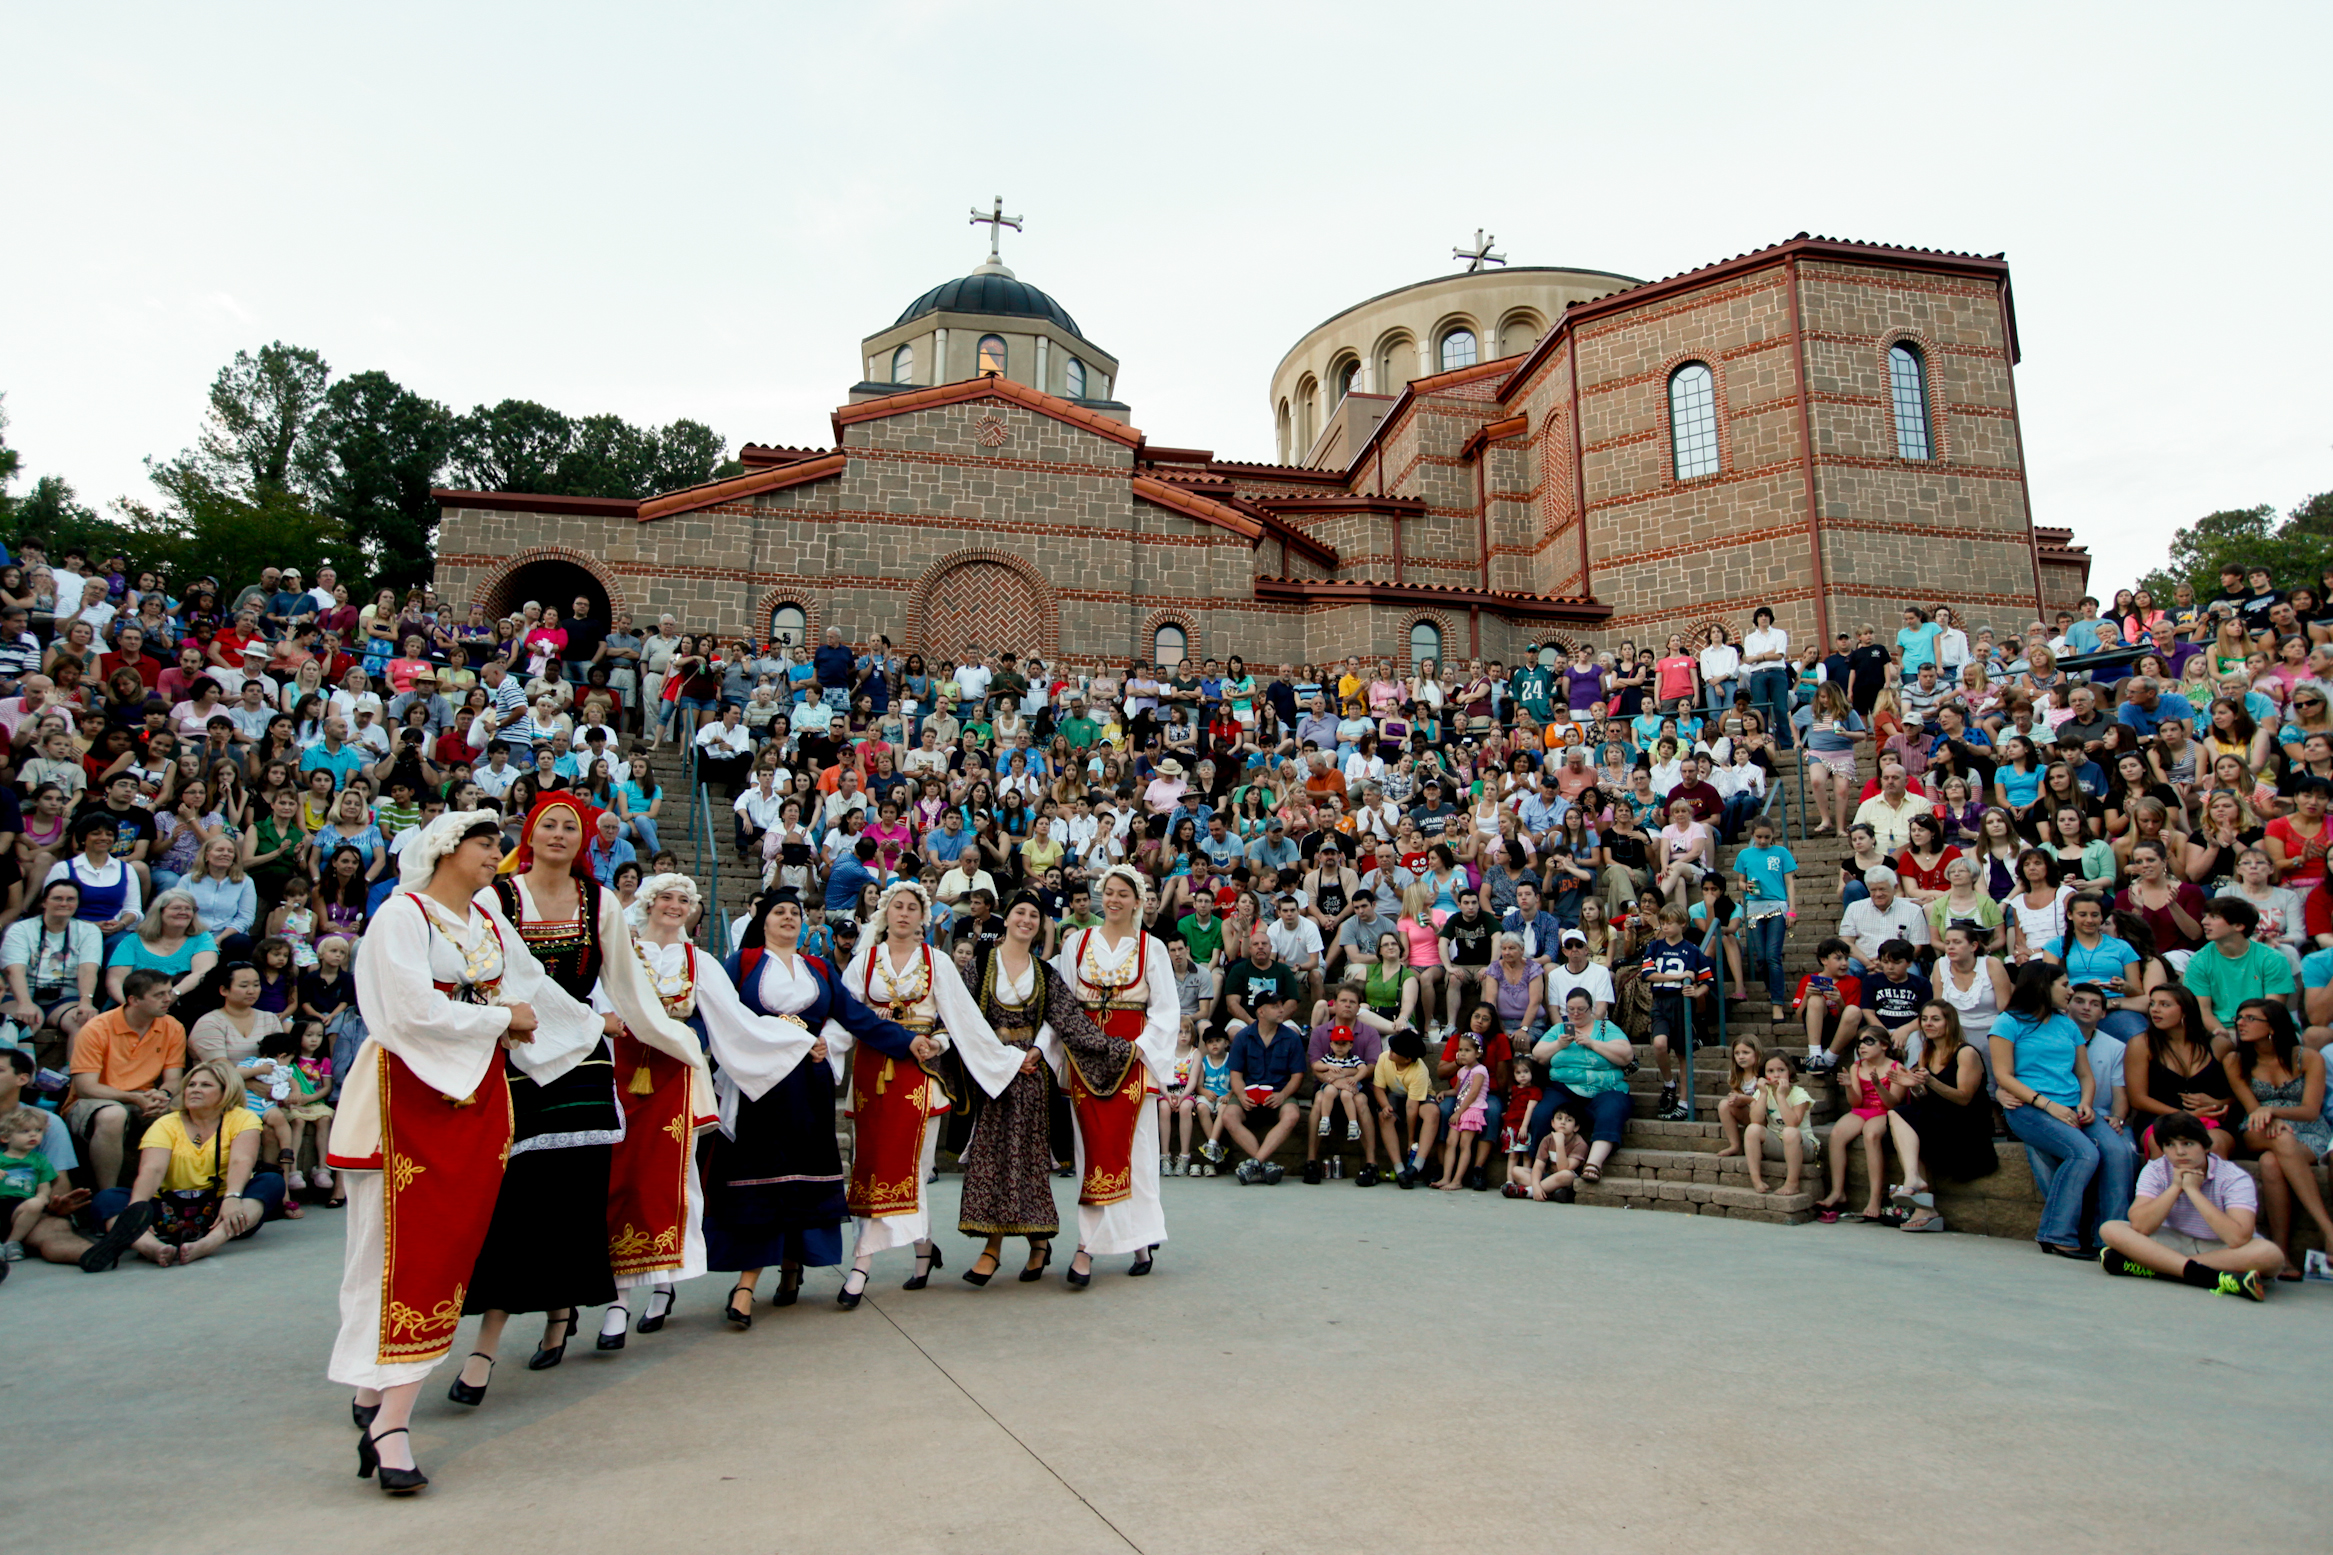 33rd Annual Marietta Greek Festival